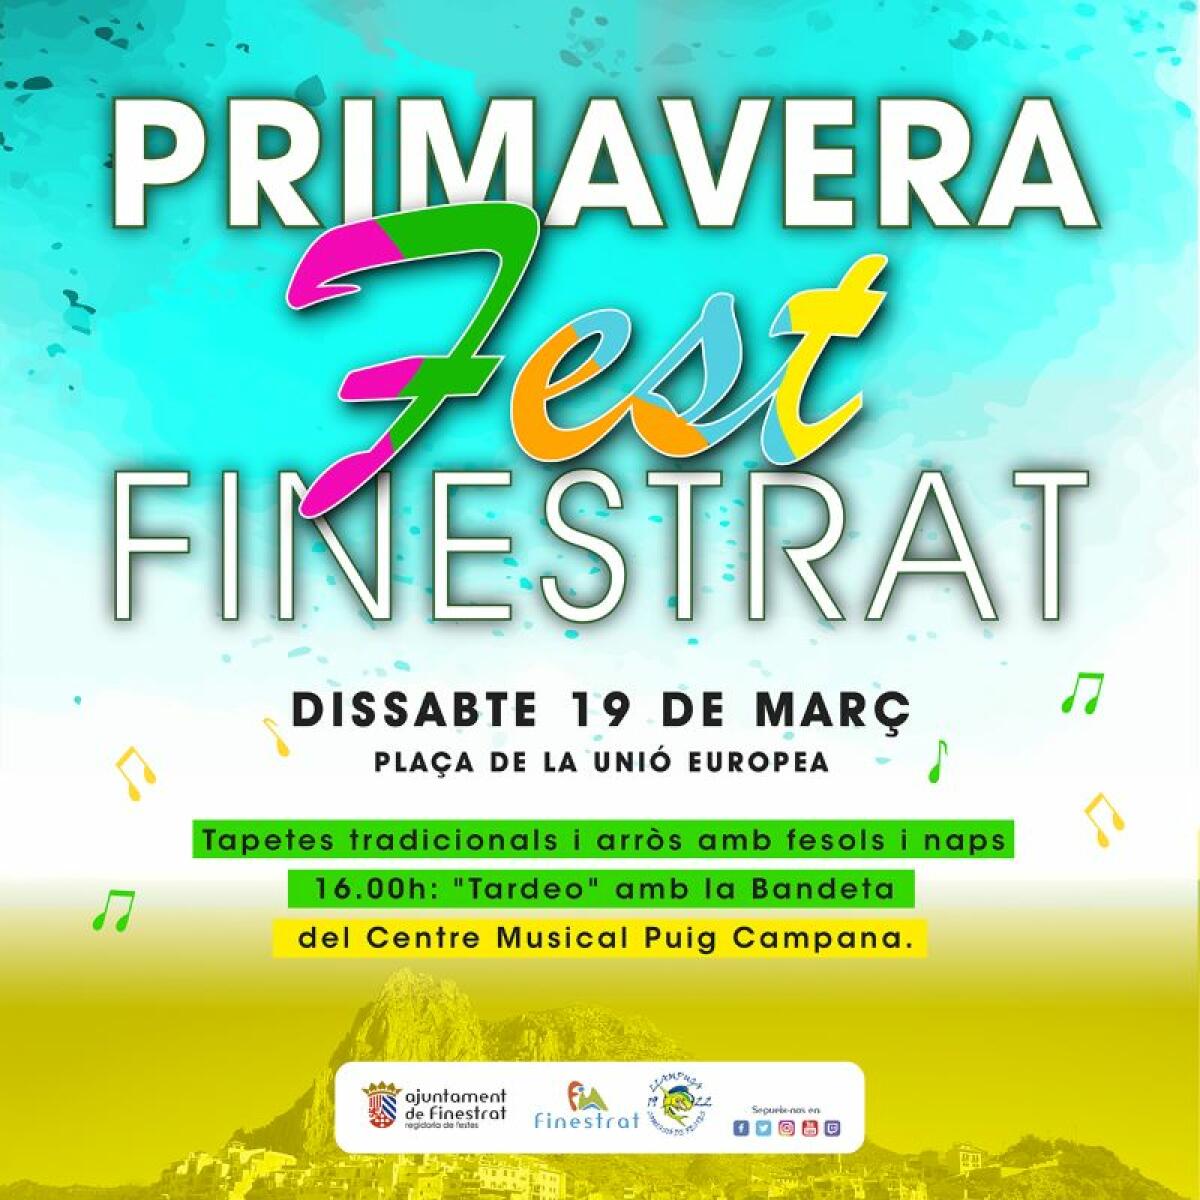 PrimaveraFest Finestrat